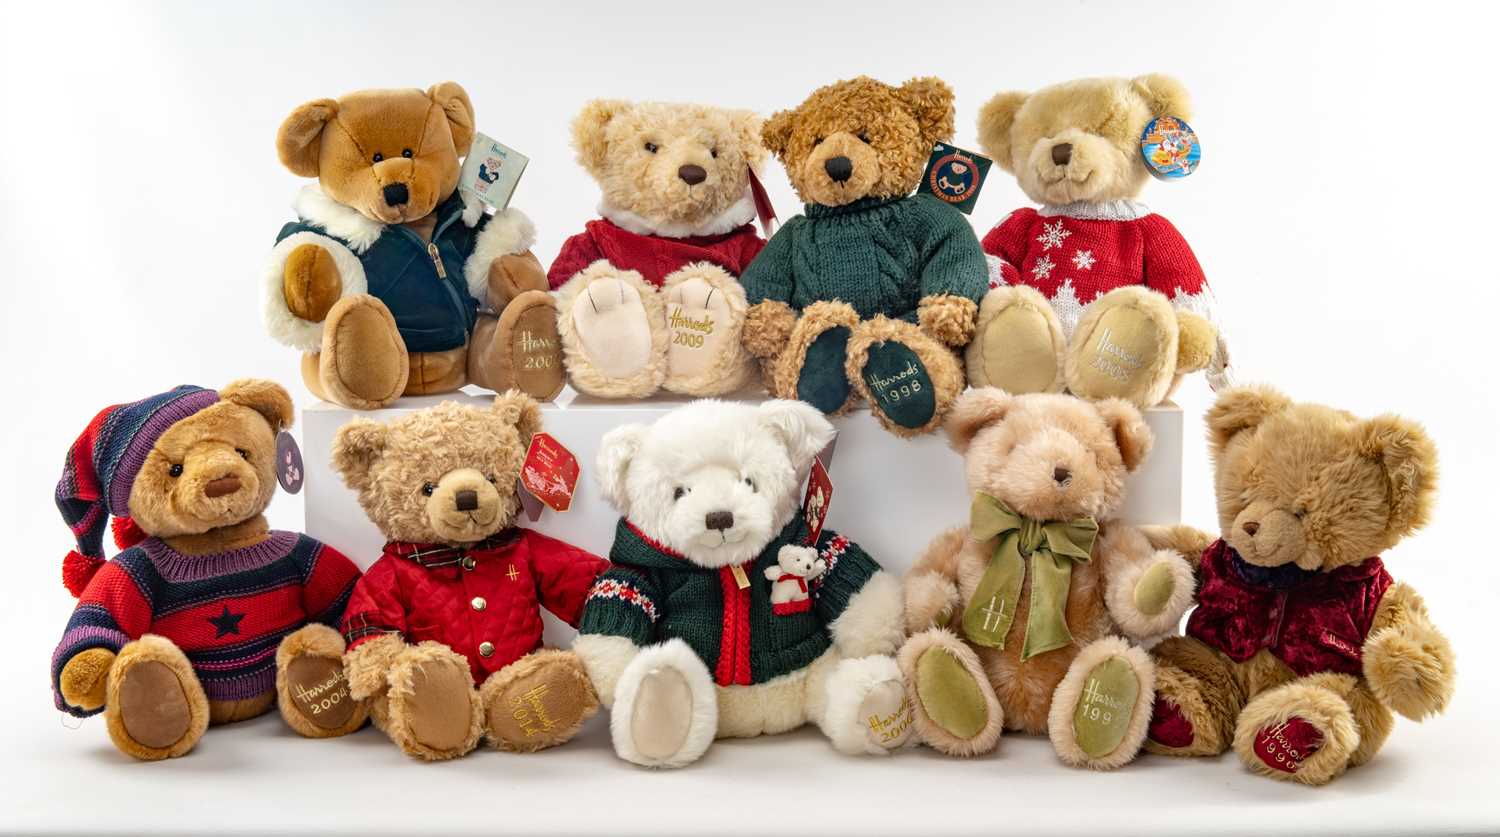 GROUP OF HARRODS CHRISTMAS TEDDY BEARS, dates including, 2004, 1996, 2009, 2008, 2001, 1998, 2014,